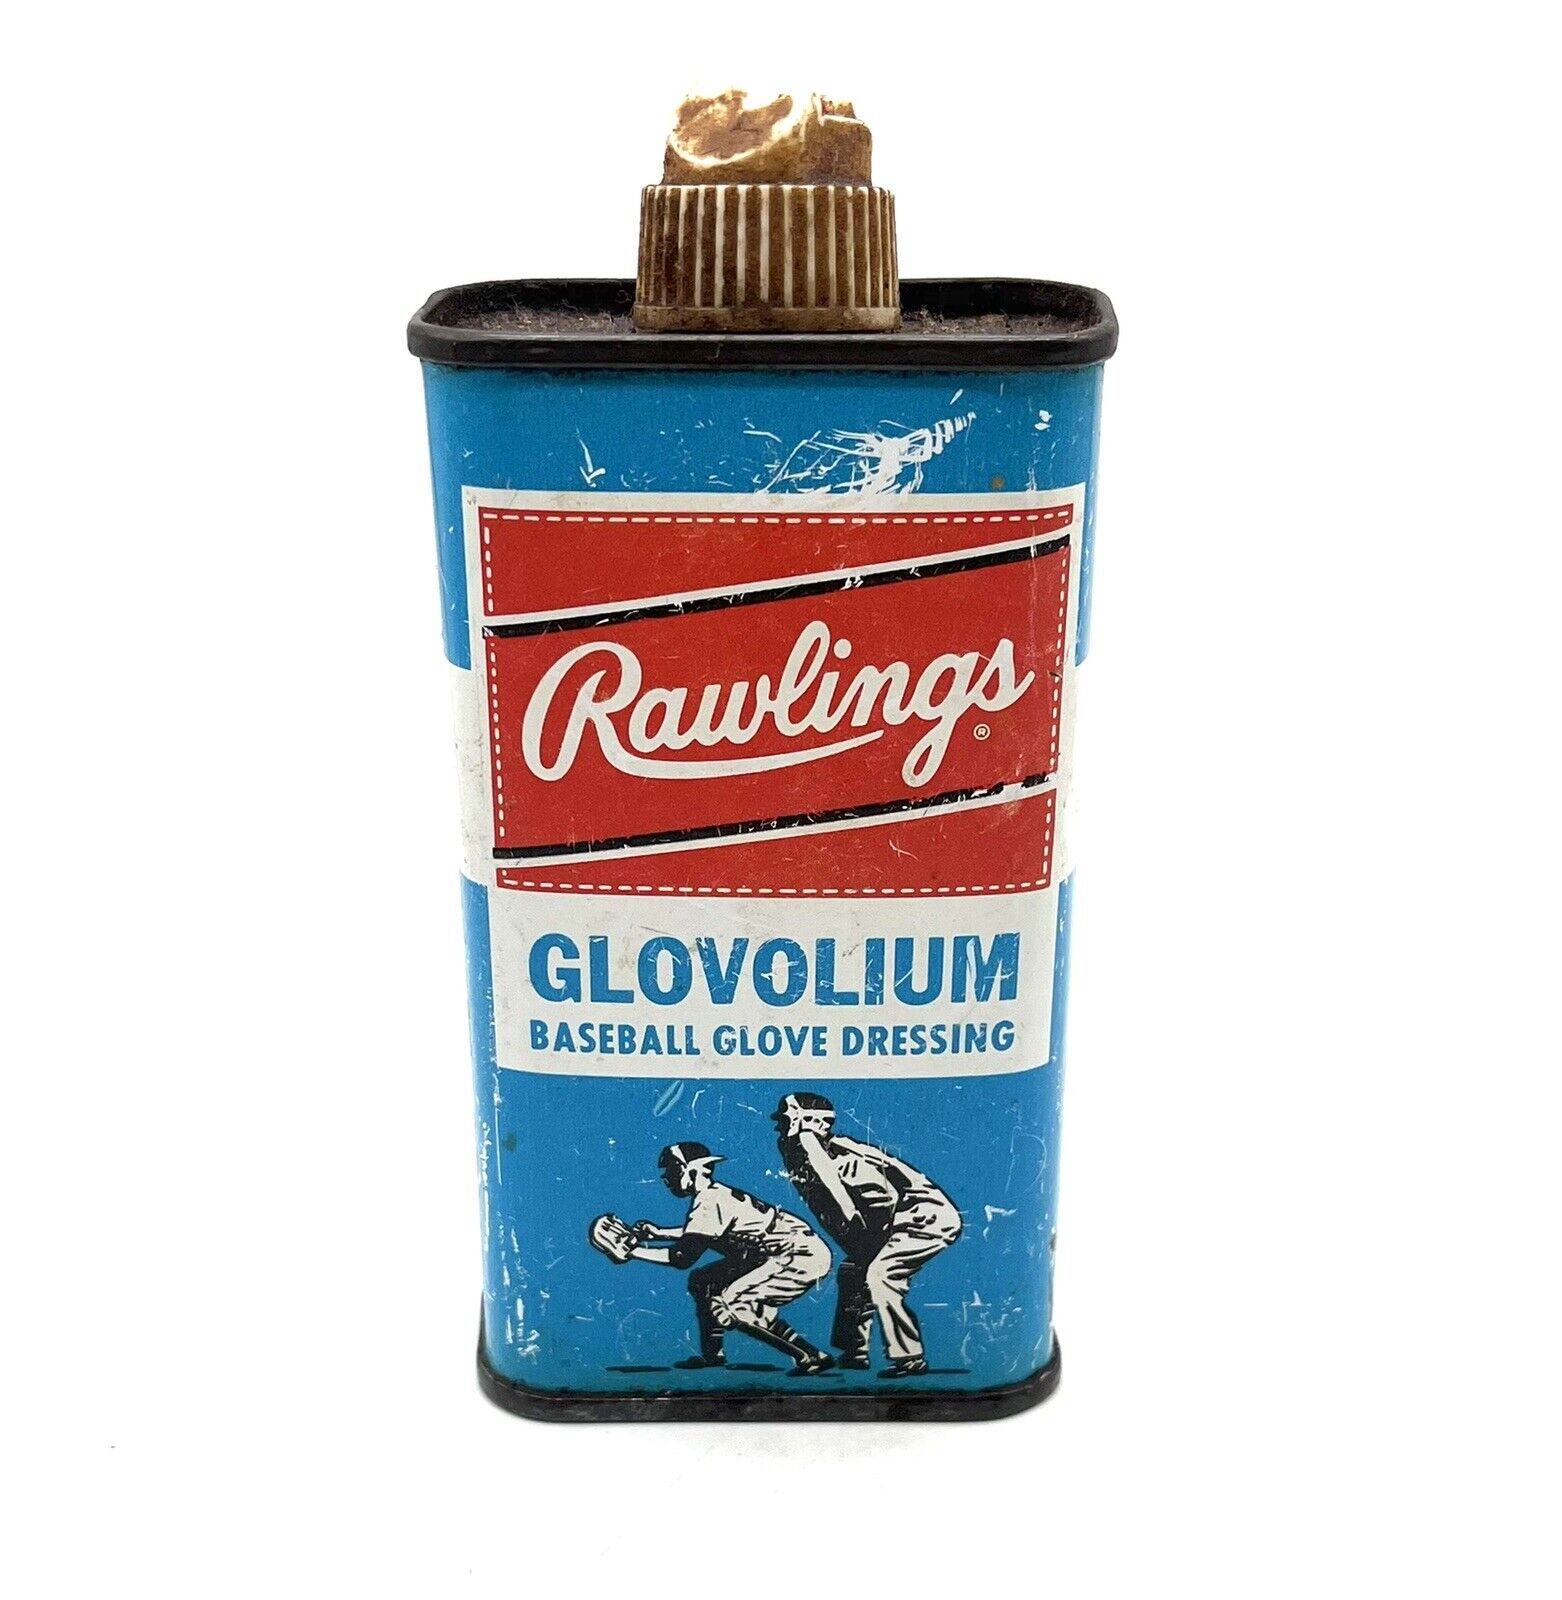 Vintage 1960s Rawlings GLOVOLIUM Baseball Glove Dressing Advertising Tin OIL Can